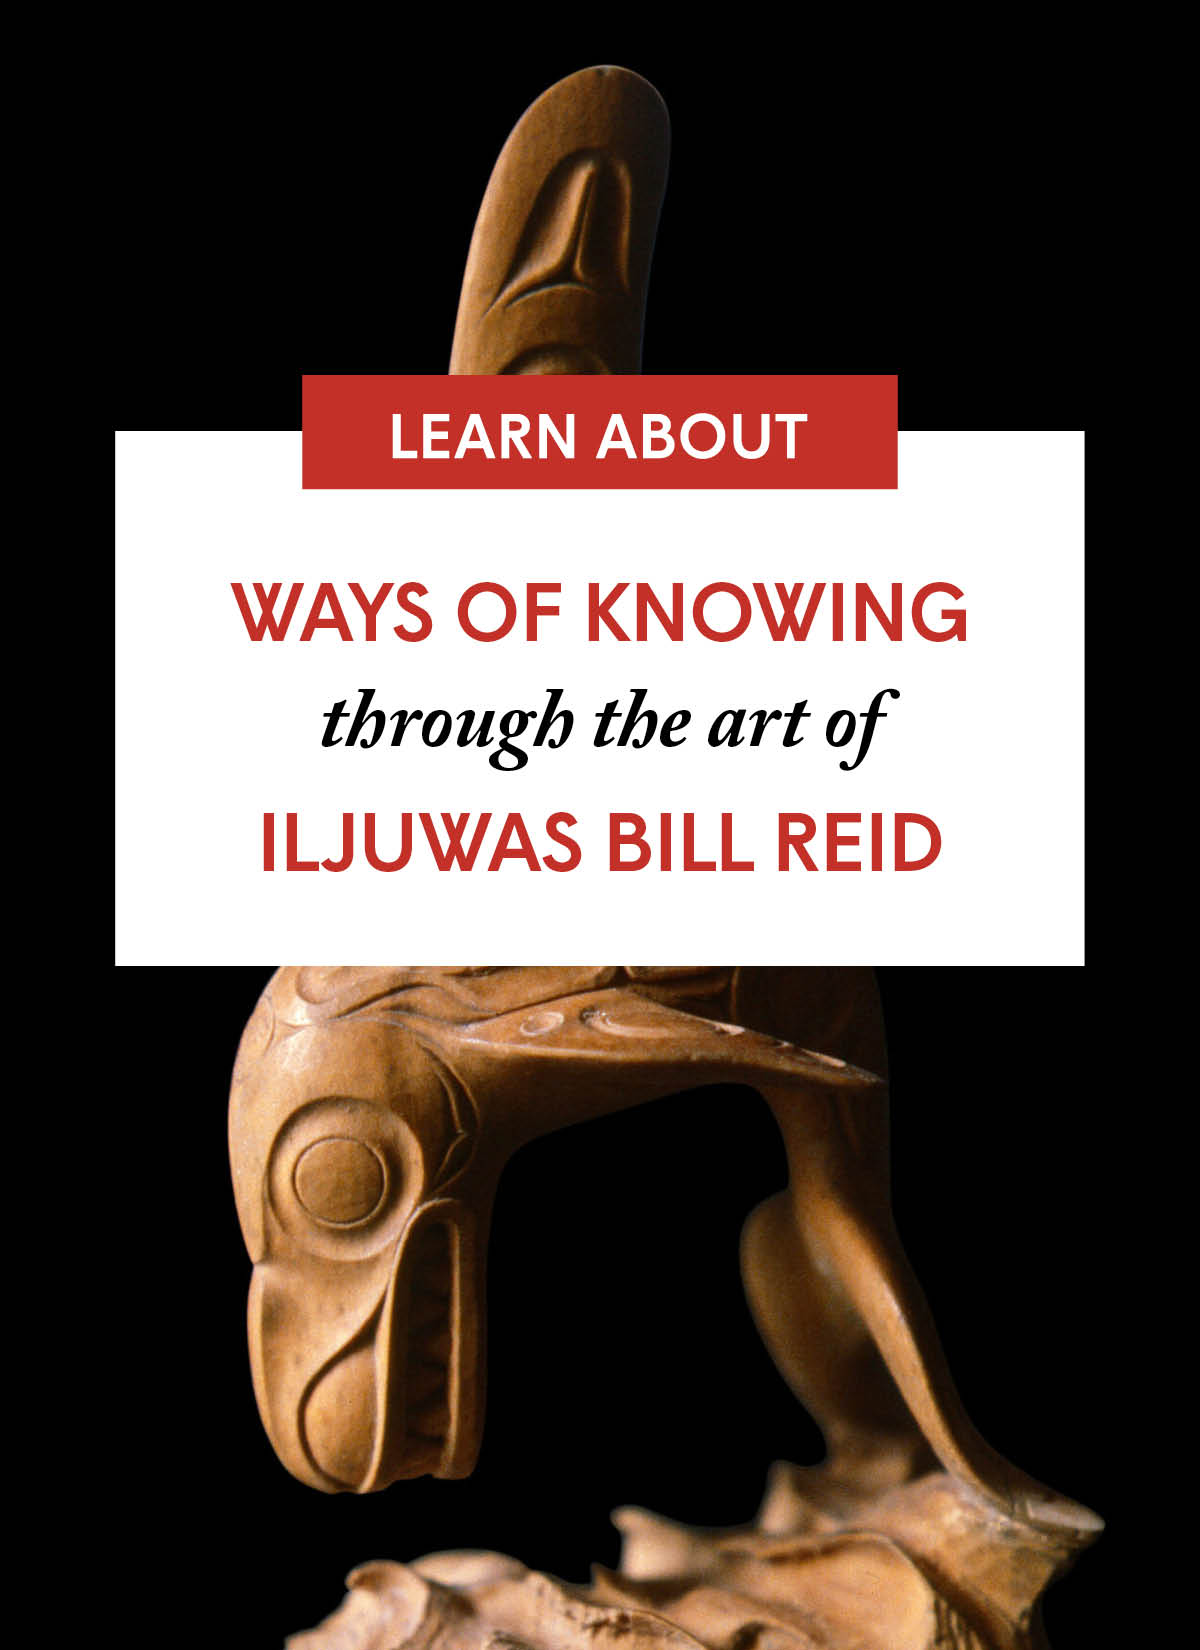 Ways of Knowing through the art of Iljuwas Bill Reid